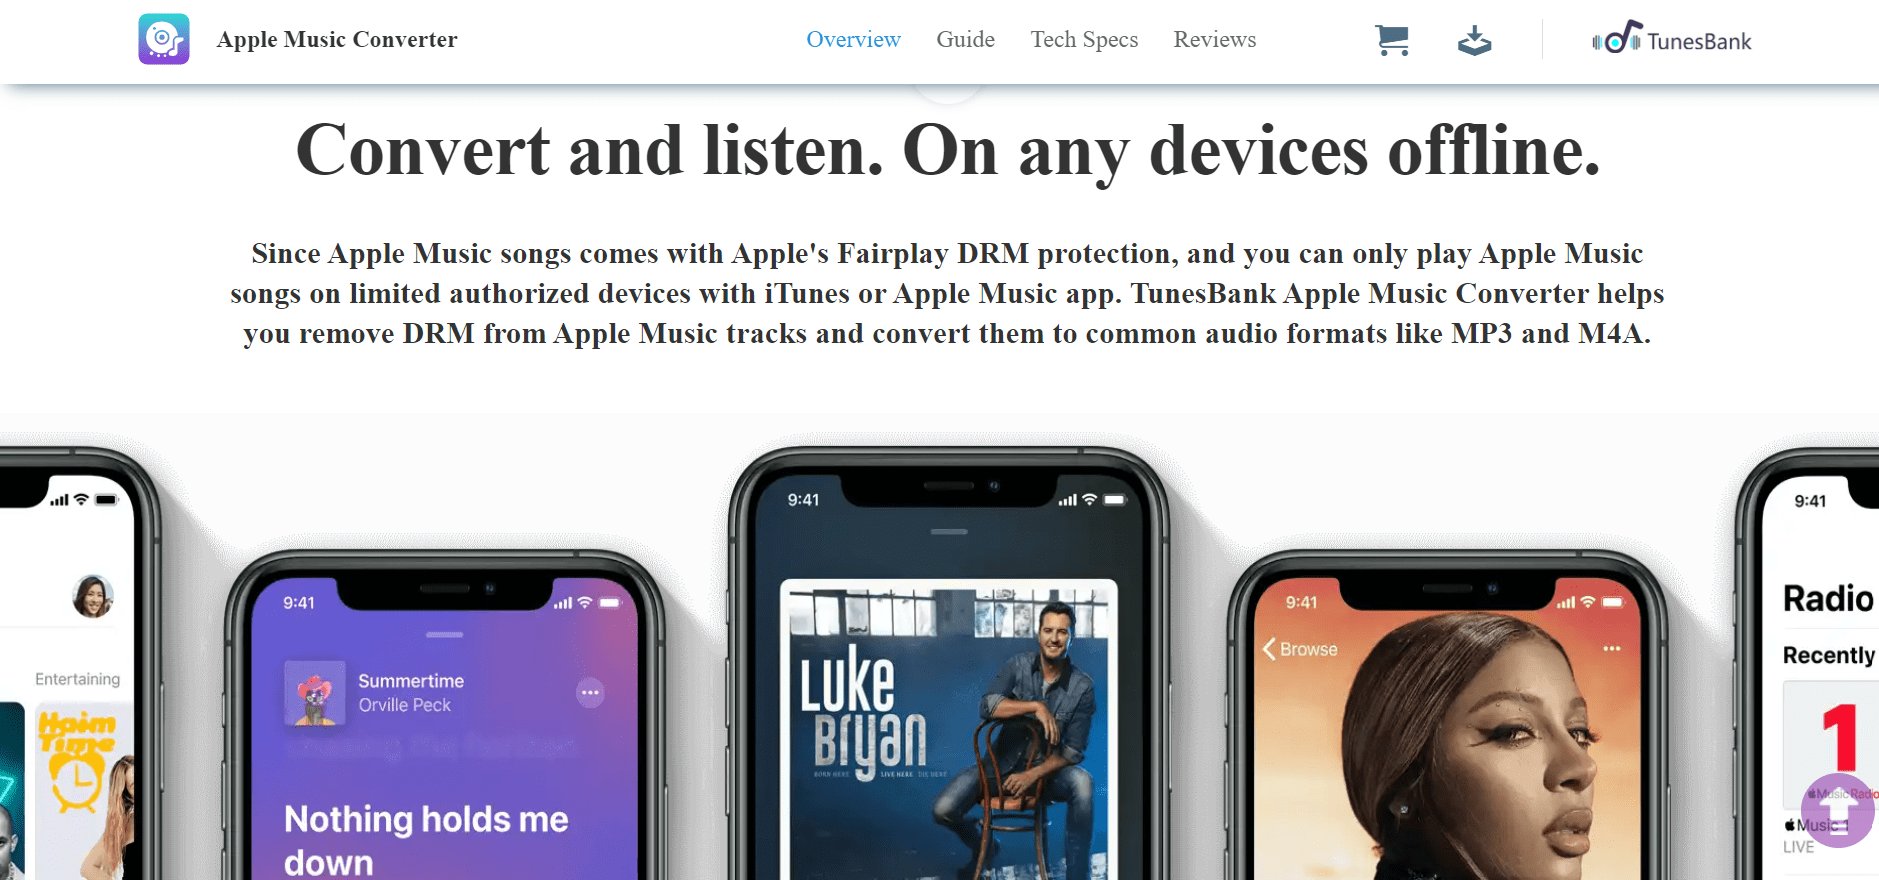 TunesBank Apple Music Converter-overview2